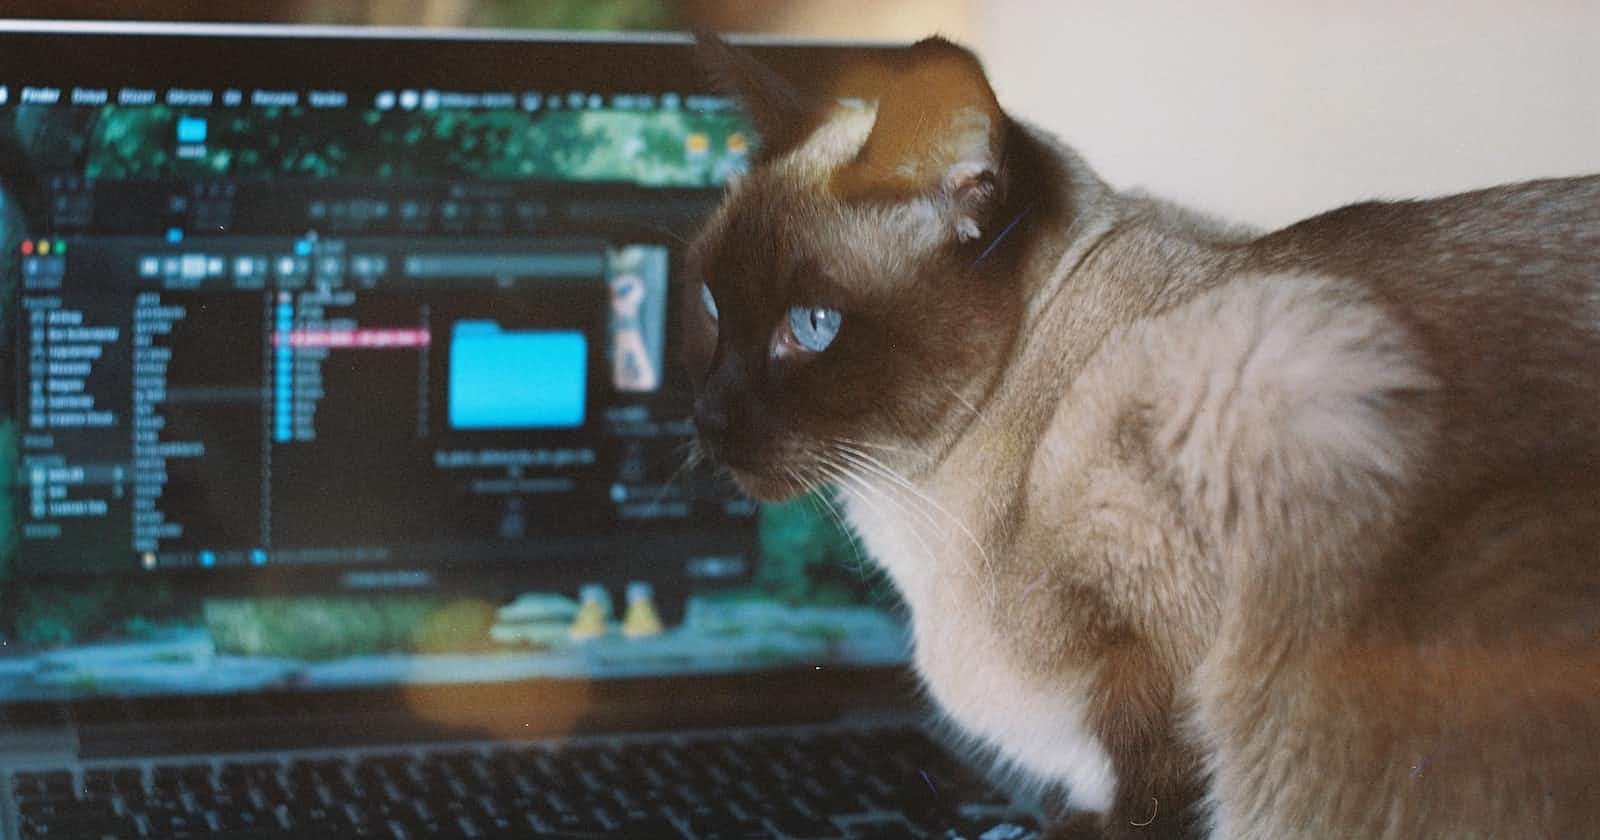 Cat : A Bare-bones "Editor"